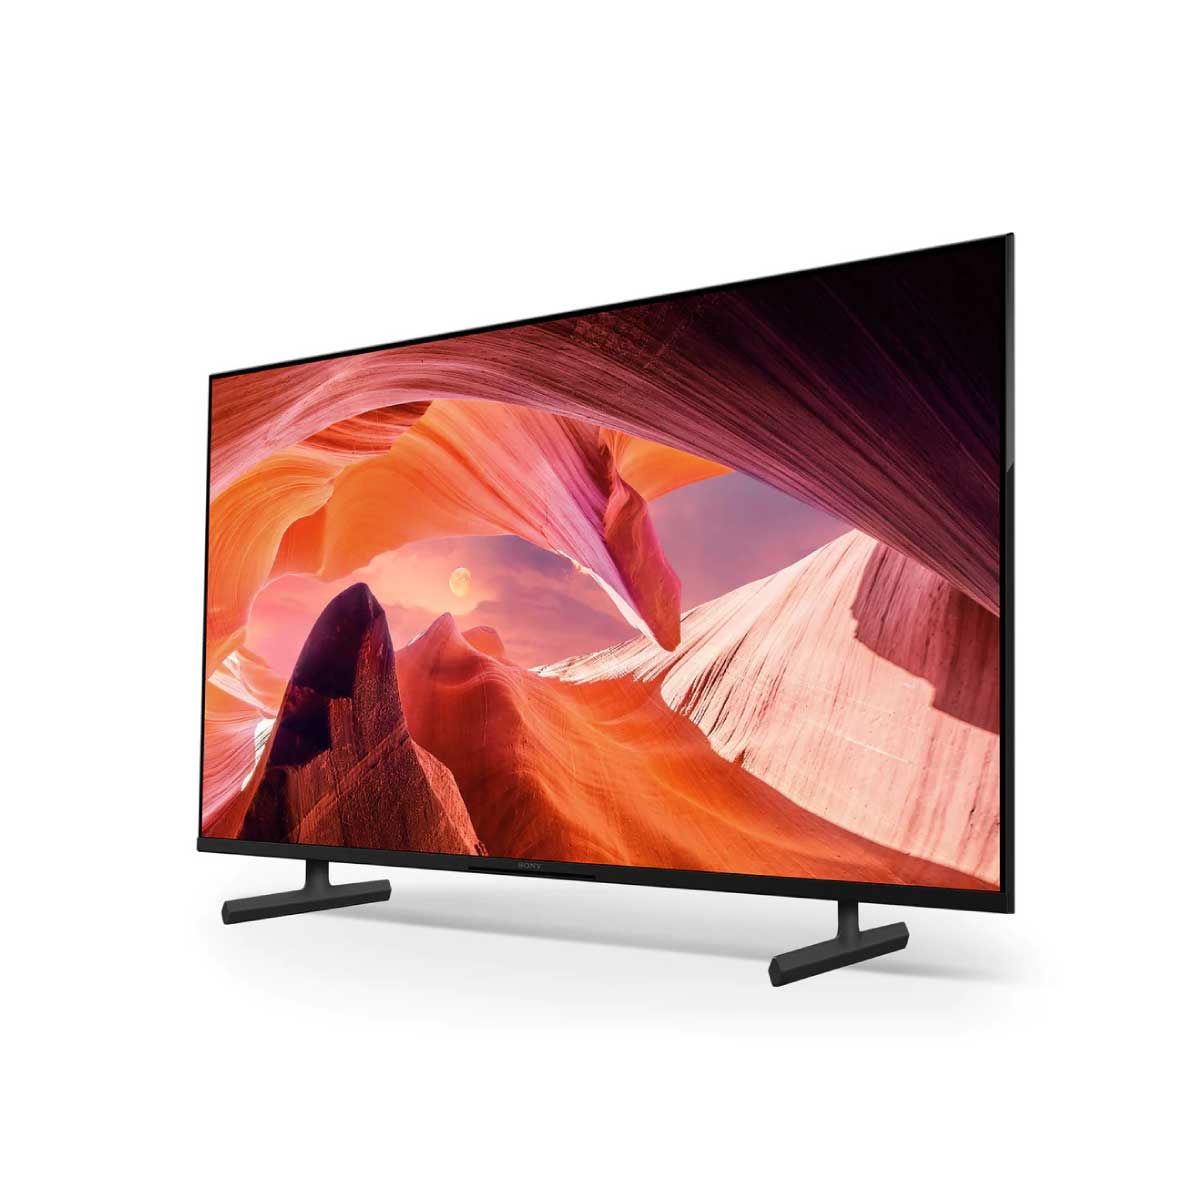 SONY Bravia LED Google TV 4K รุ่น KD-75X80L สมาร์ททีวี 75 นิ้ว X80L Series  HDR Processor X1